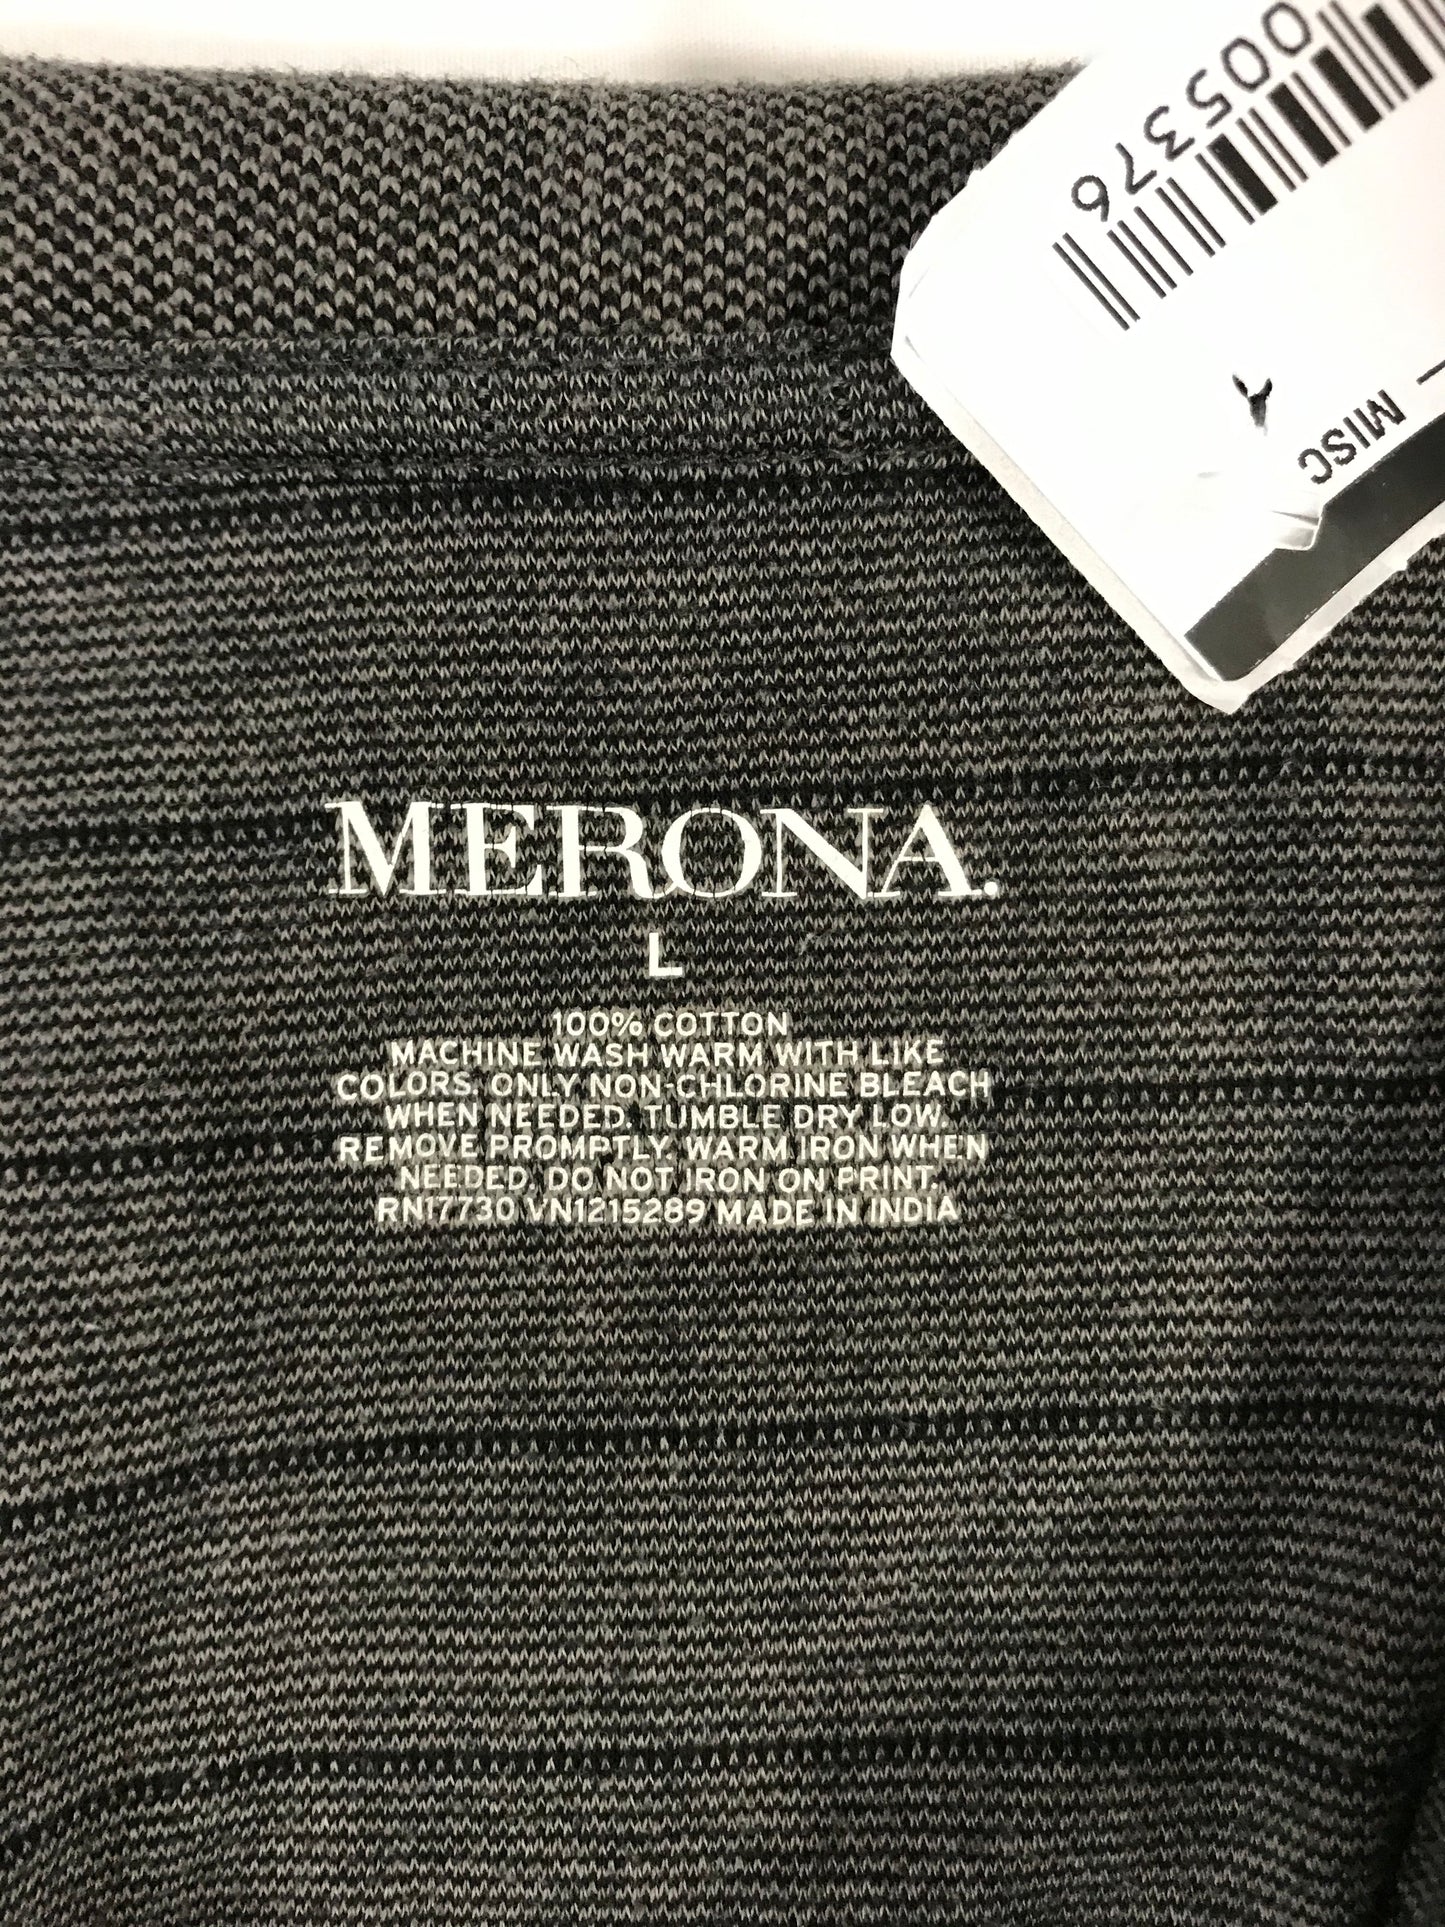 Merona Shirt